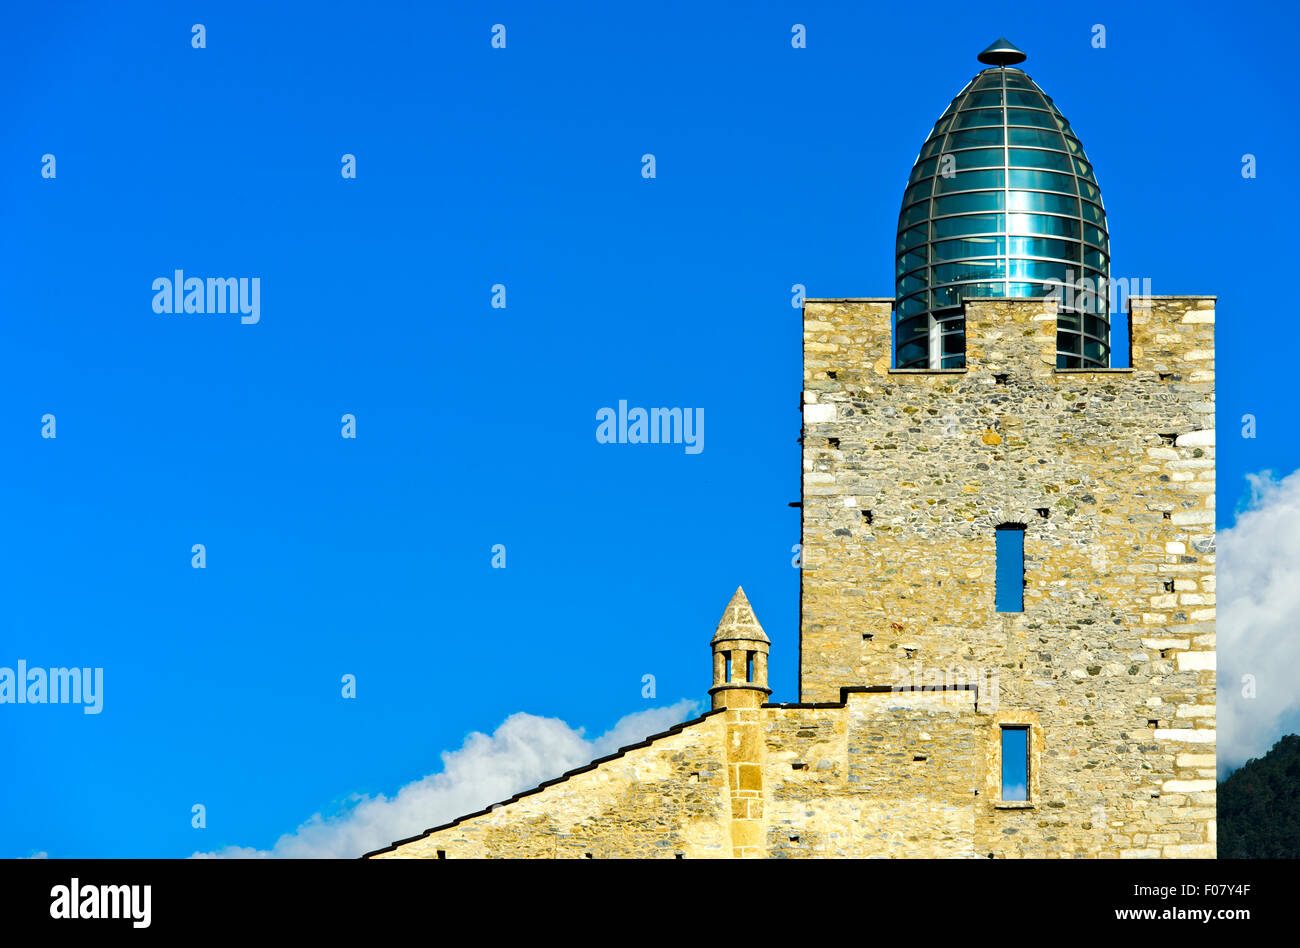 Bishop's Castle Leuk with glass cupola by Mario Botta, Leuk, Valais, Switzerland Stock Photo